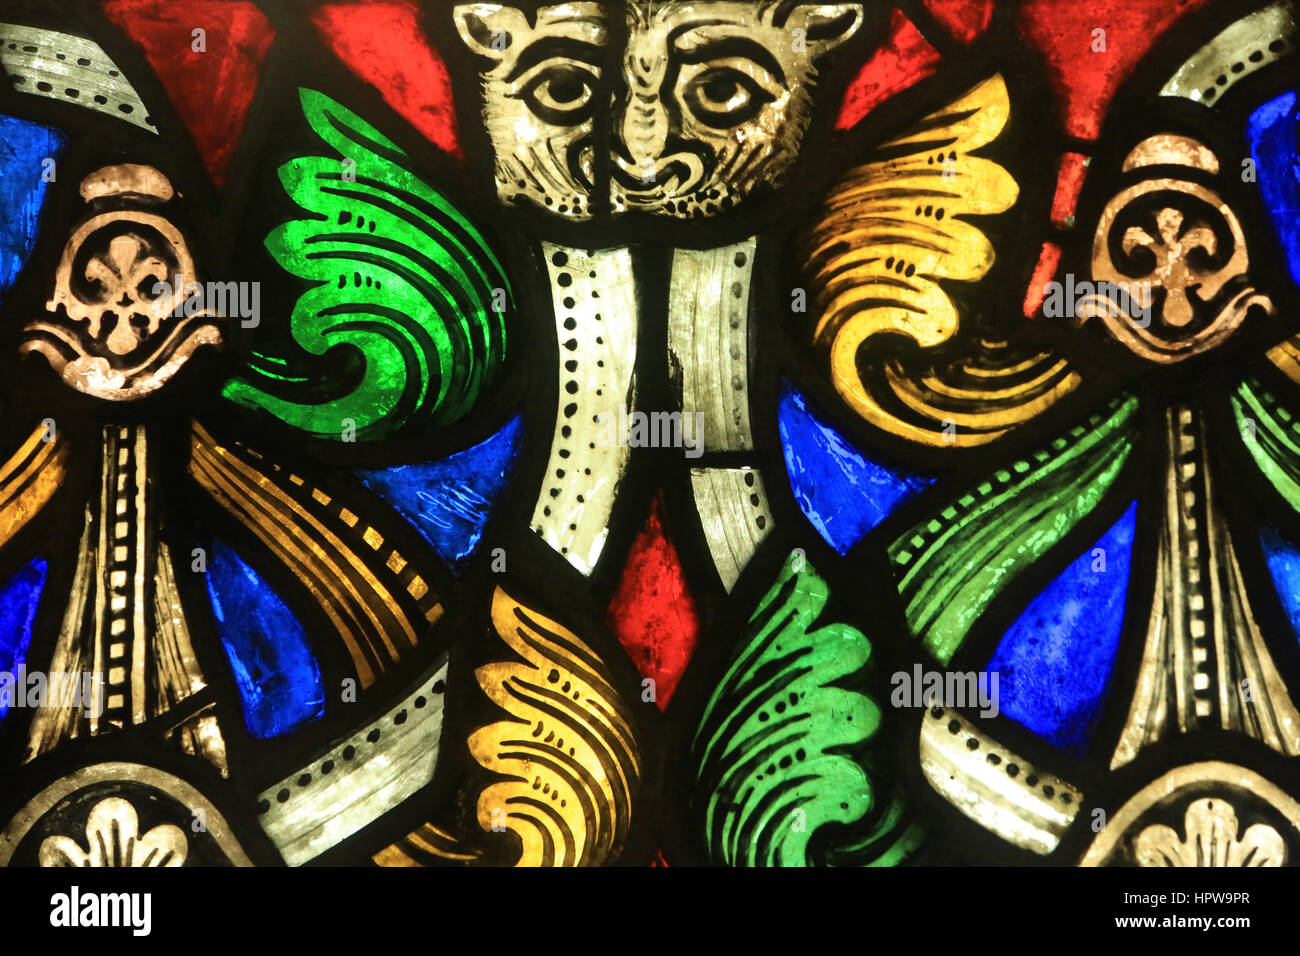 Musée de l'Oeuvre Notre-Dame de Strasbourg. Gothic stained glass window. Oeuvre Notre-Dame de Strasbourg Museum. Stock Photo